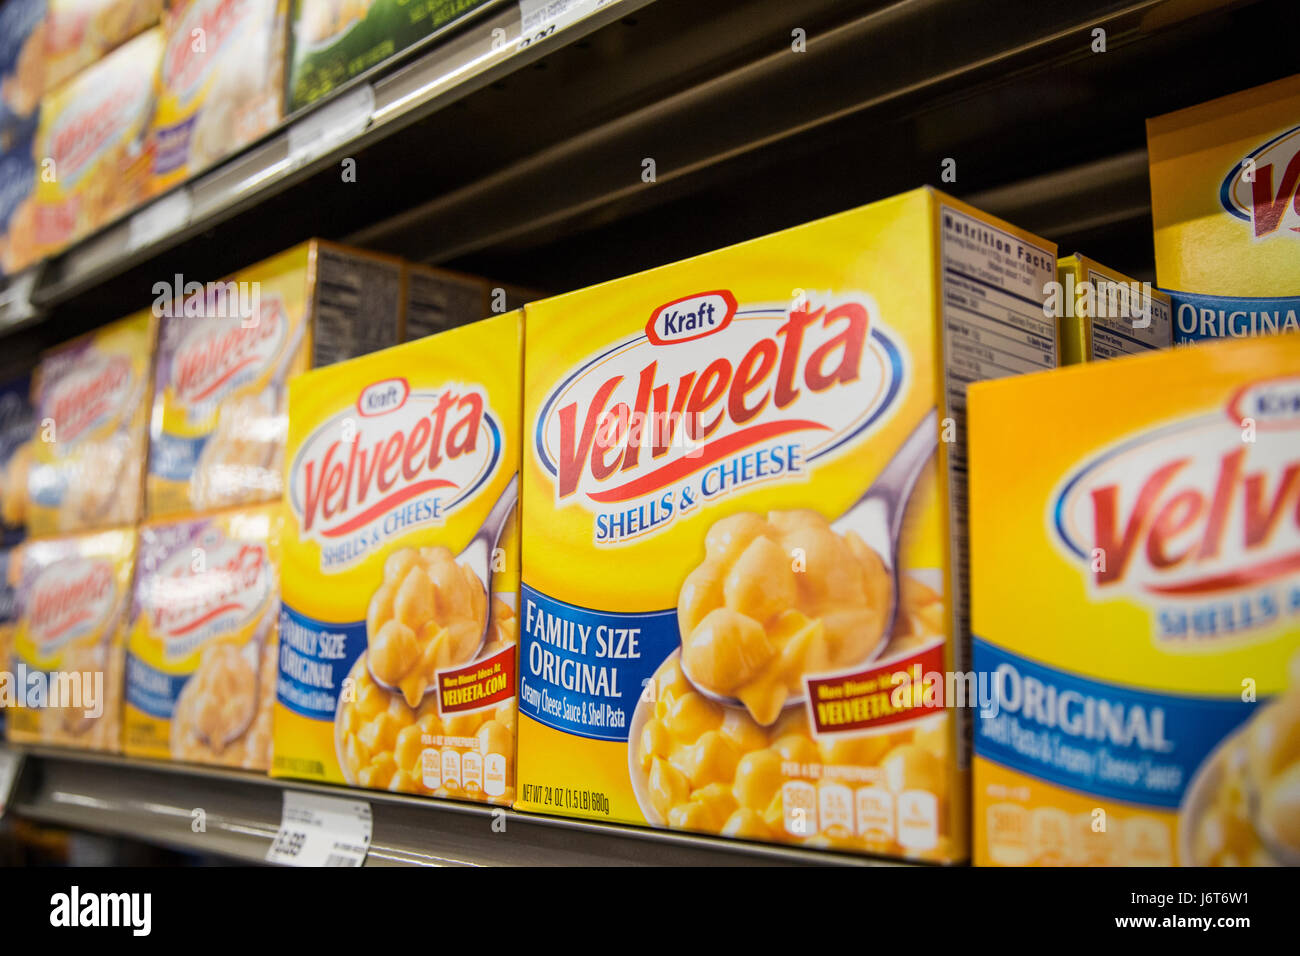 Boxes of Kraft Velveeta brand shells & cheese on the shelf of a grocery store Stock Photo